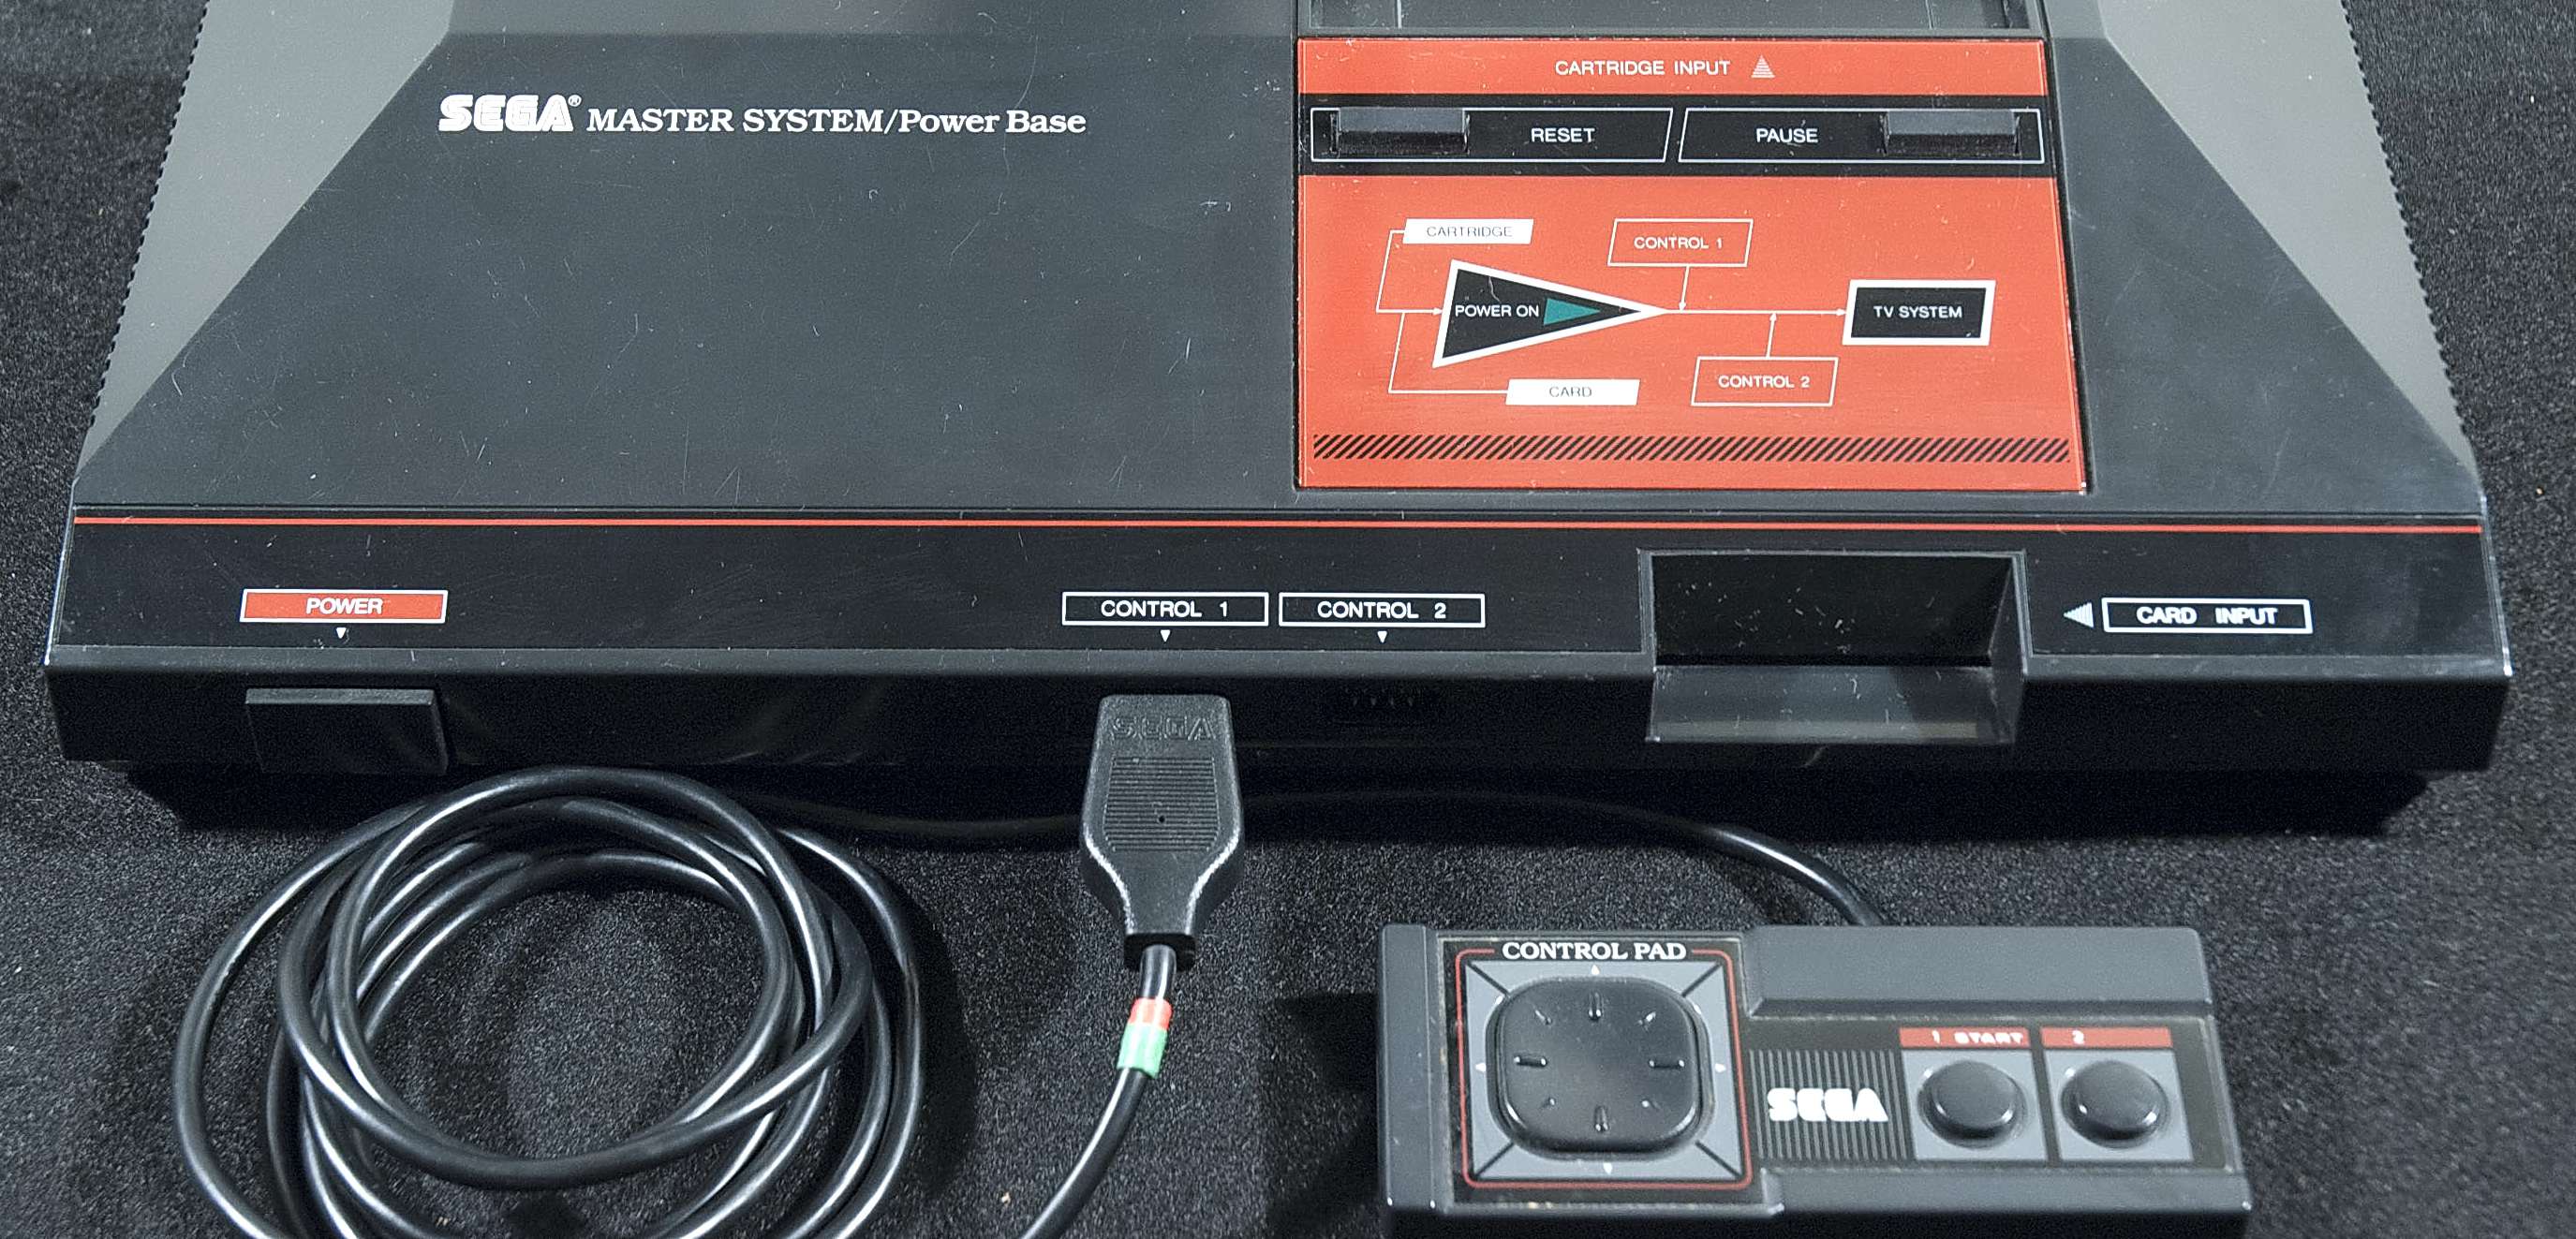 QUIZ wiedzy o Sega Master System